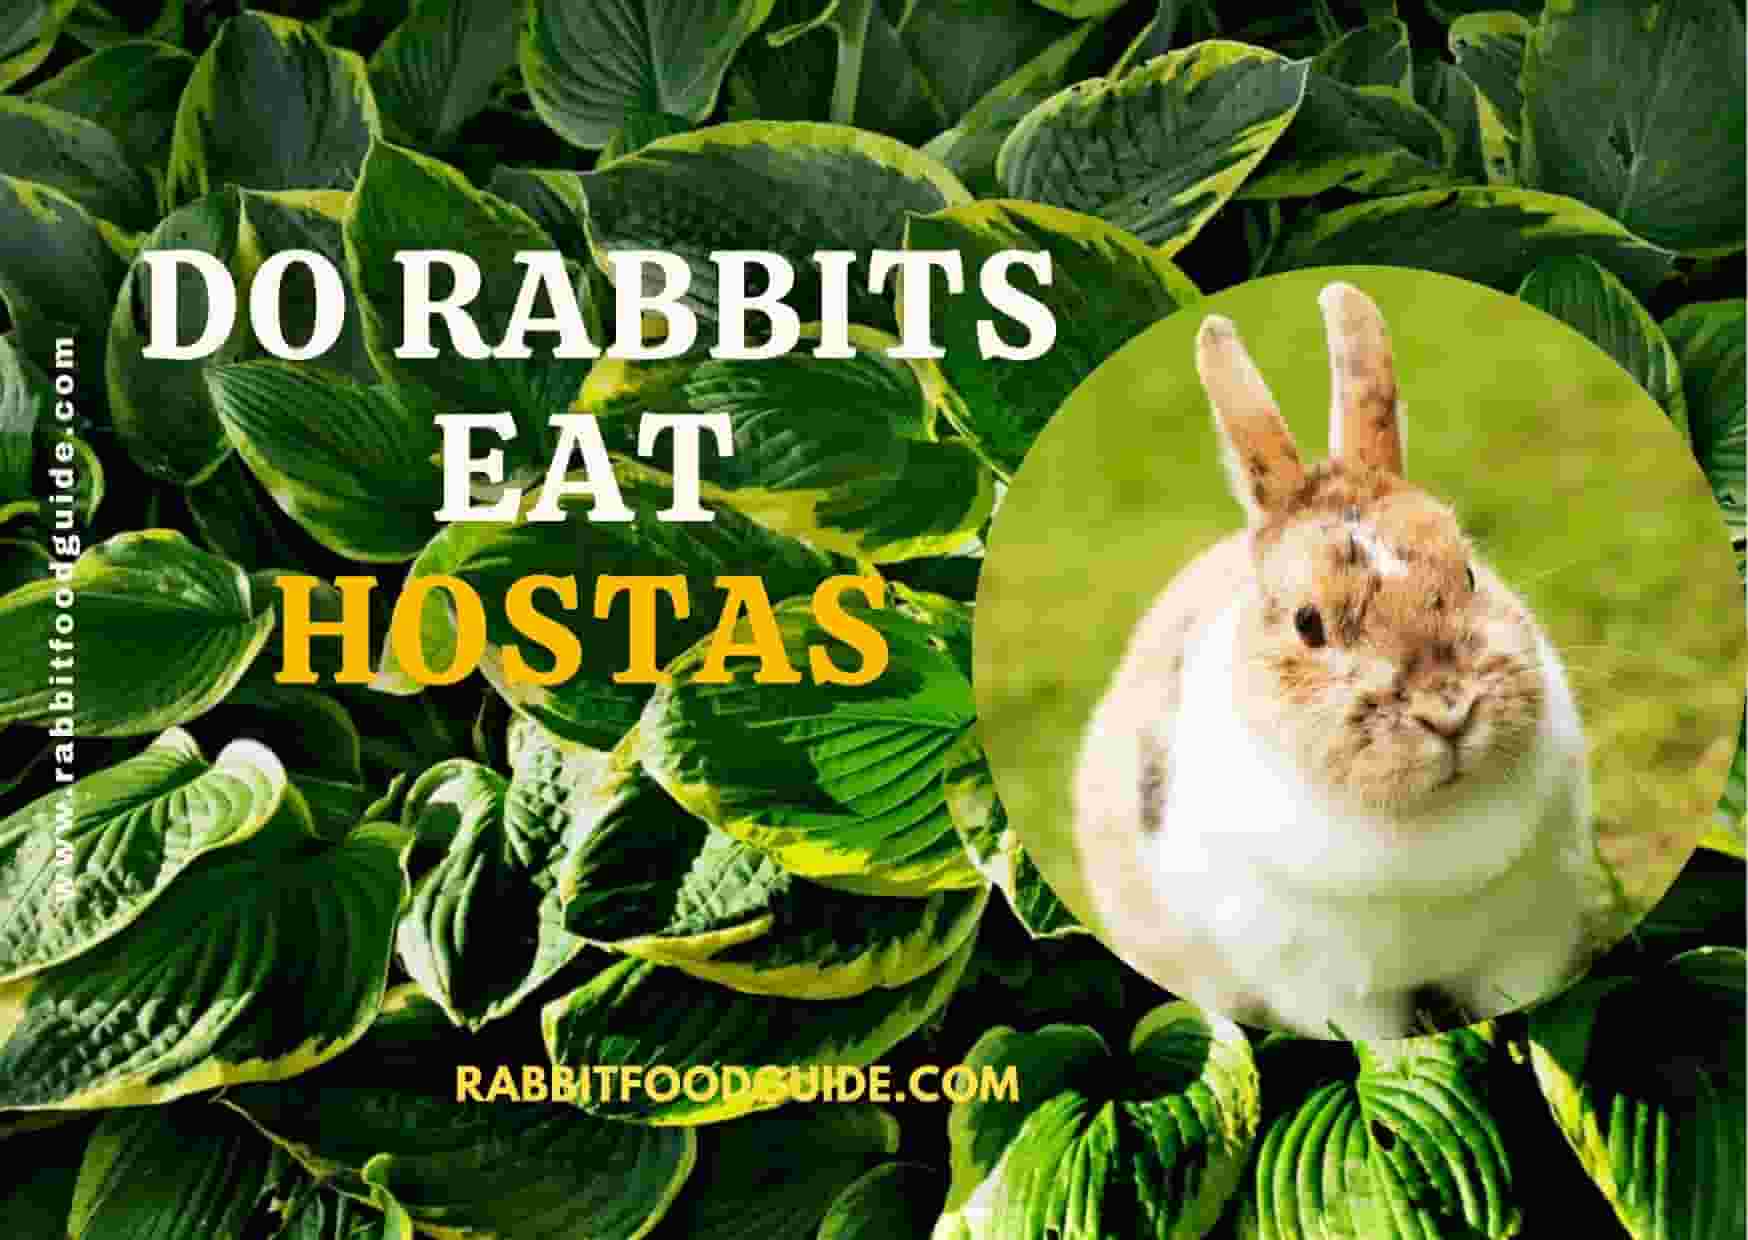 can rabbits eat hostas?